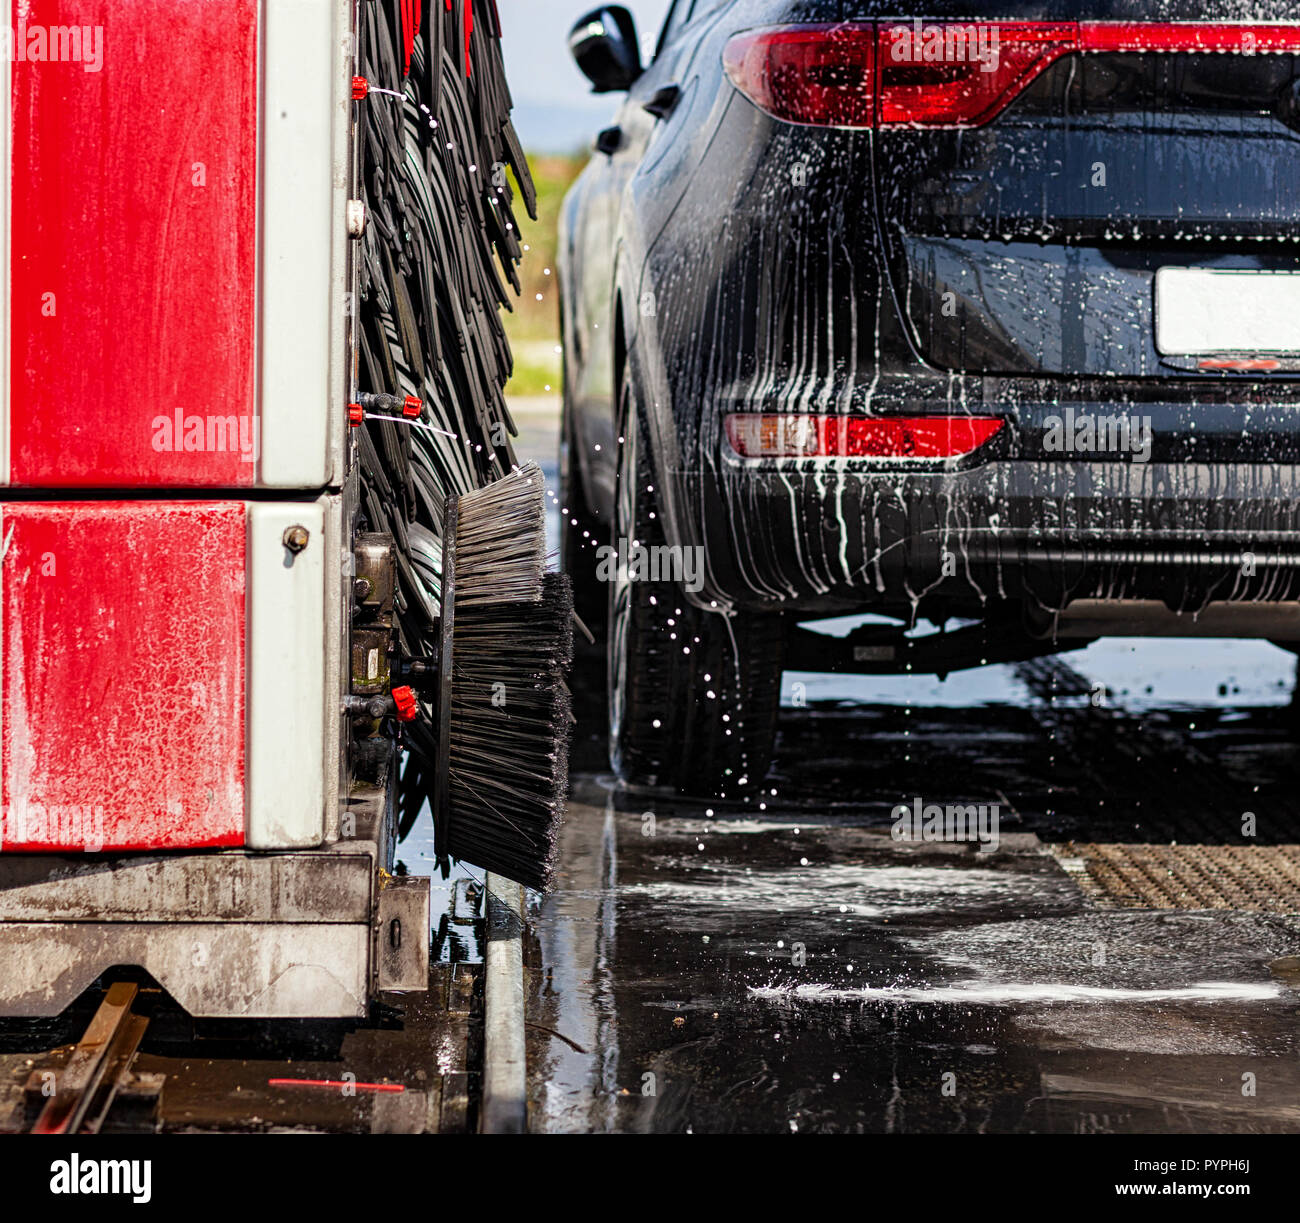 Automatic Car Wash Rotating Mop Brushes Stock Photo - Alamy